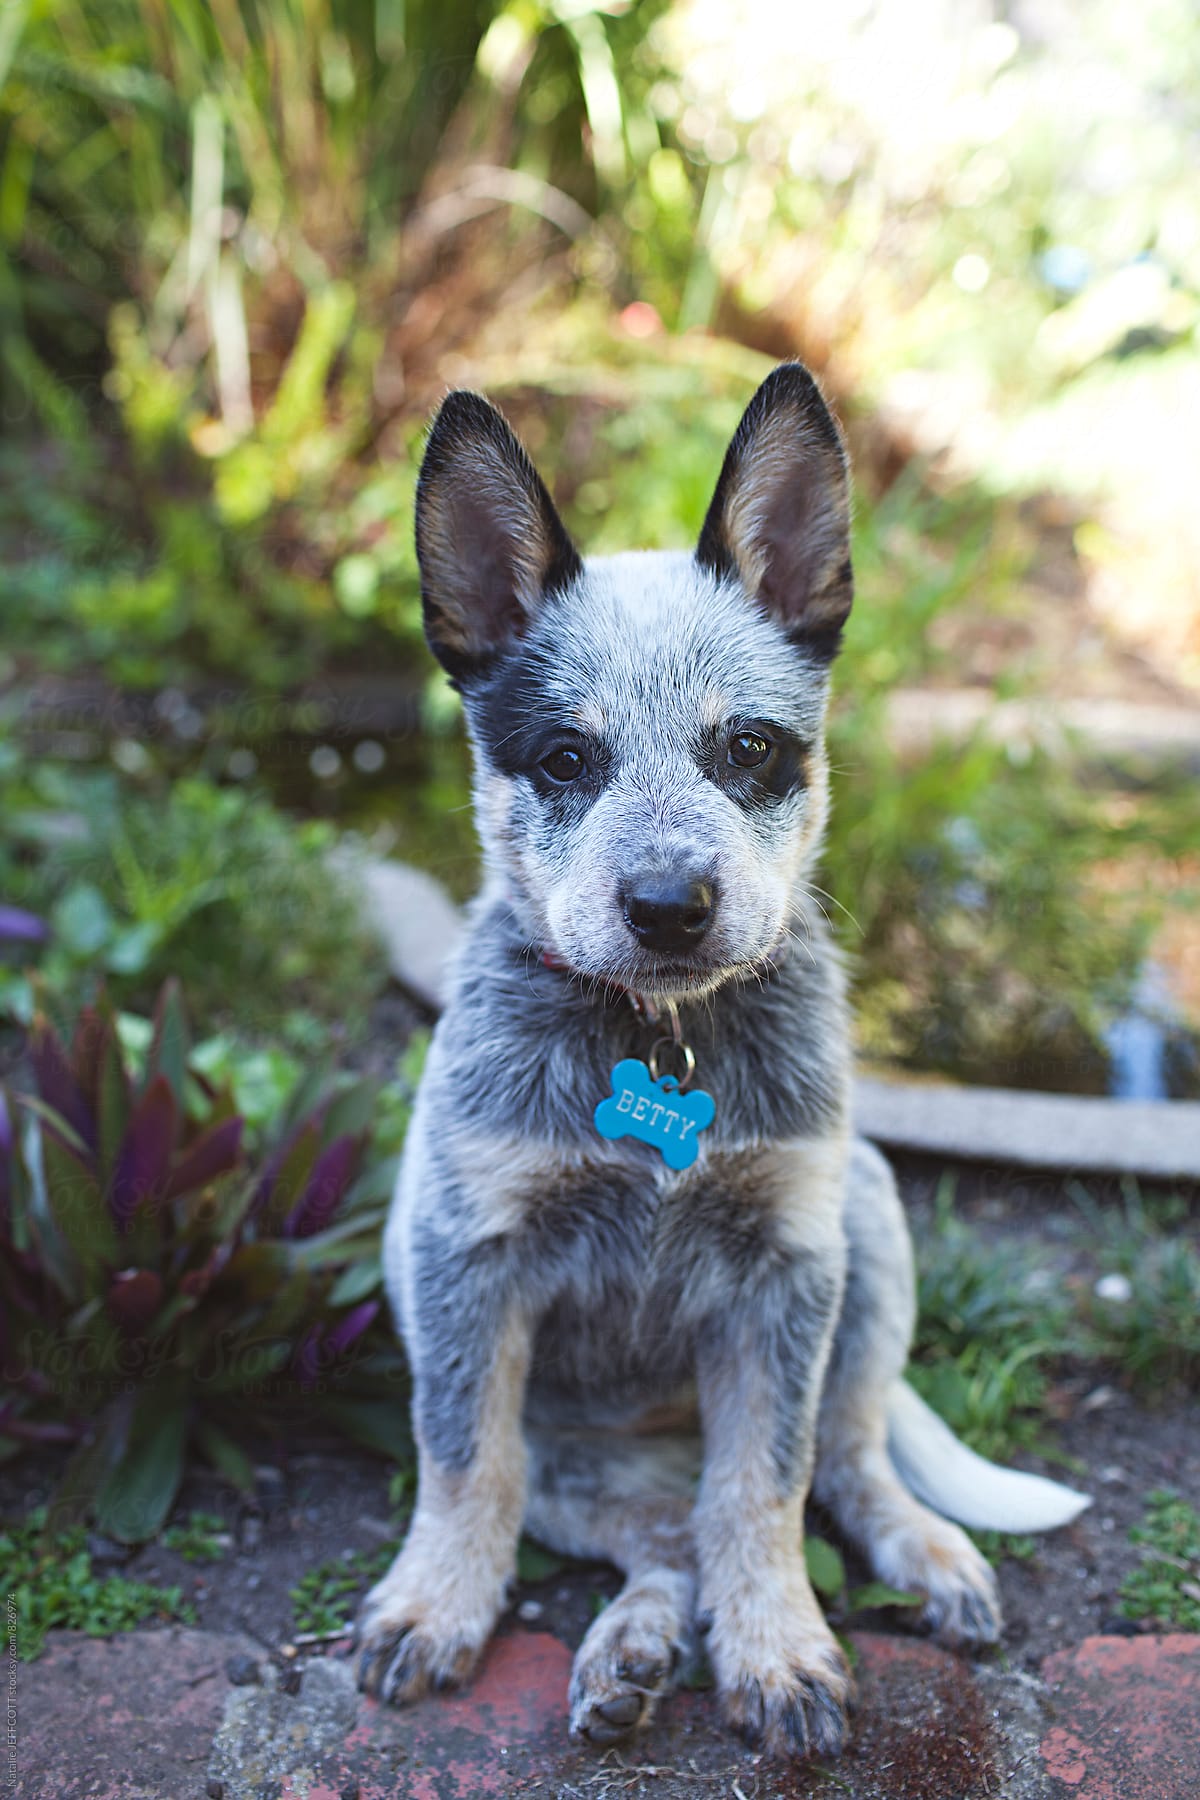 A very cute and cheeky Blue heeler puppy in a backyard